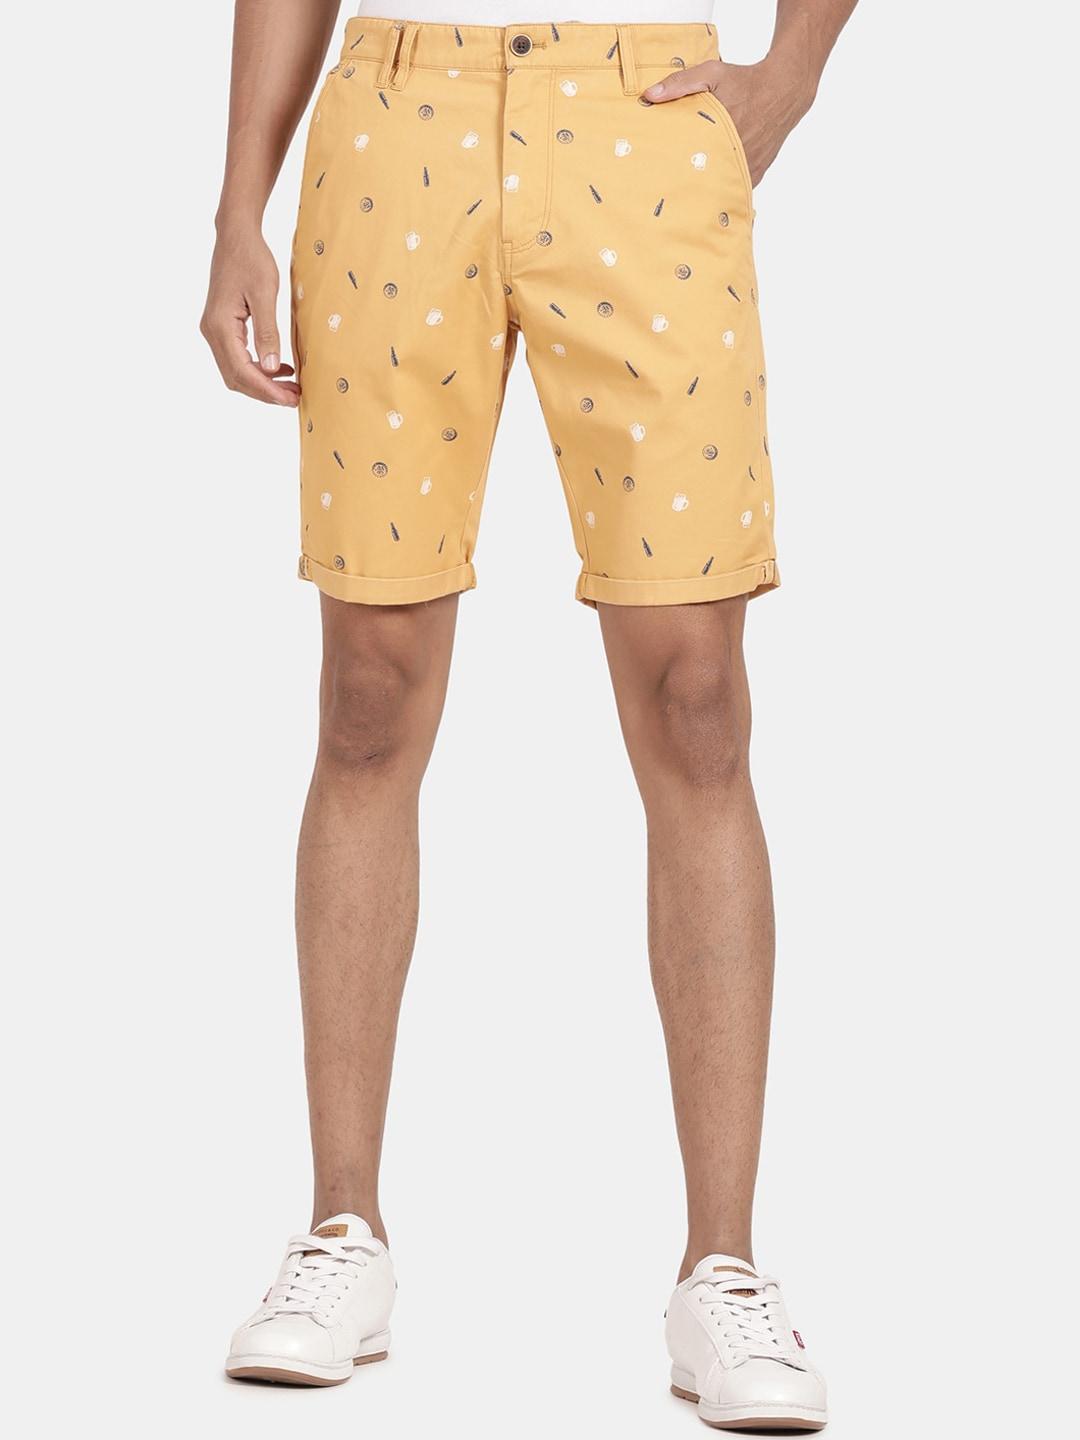 t-base-men-yellow-printed-shorts